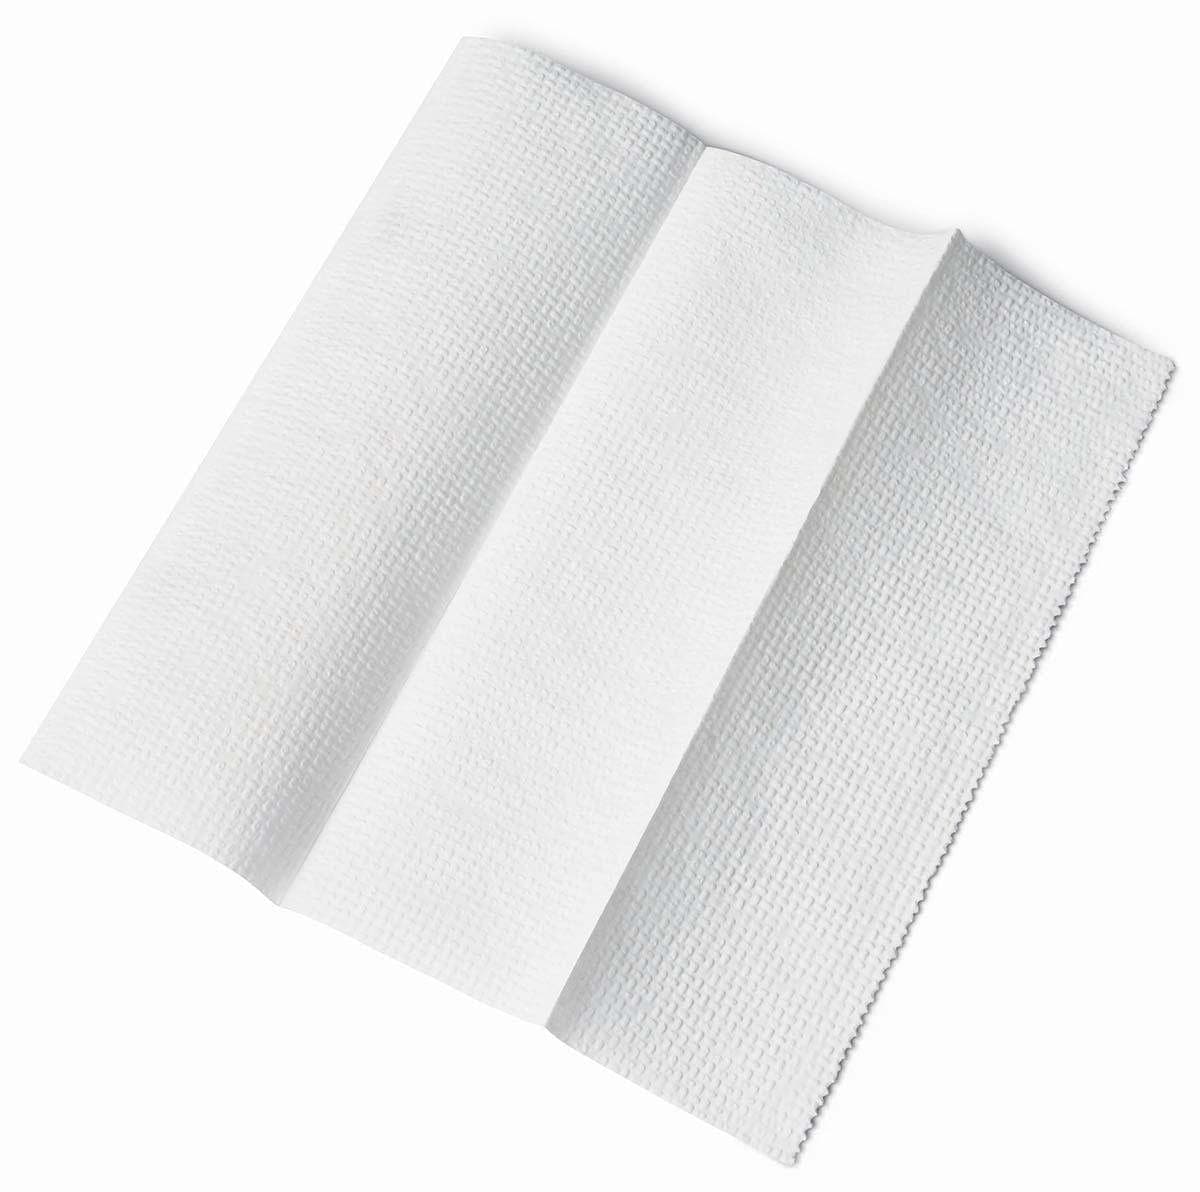 Medline Medline Premium Multi-Fold Paper Towels NON26818